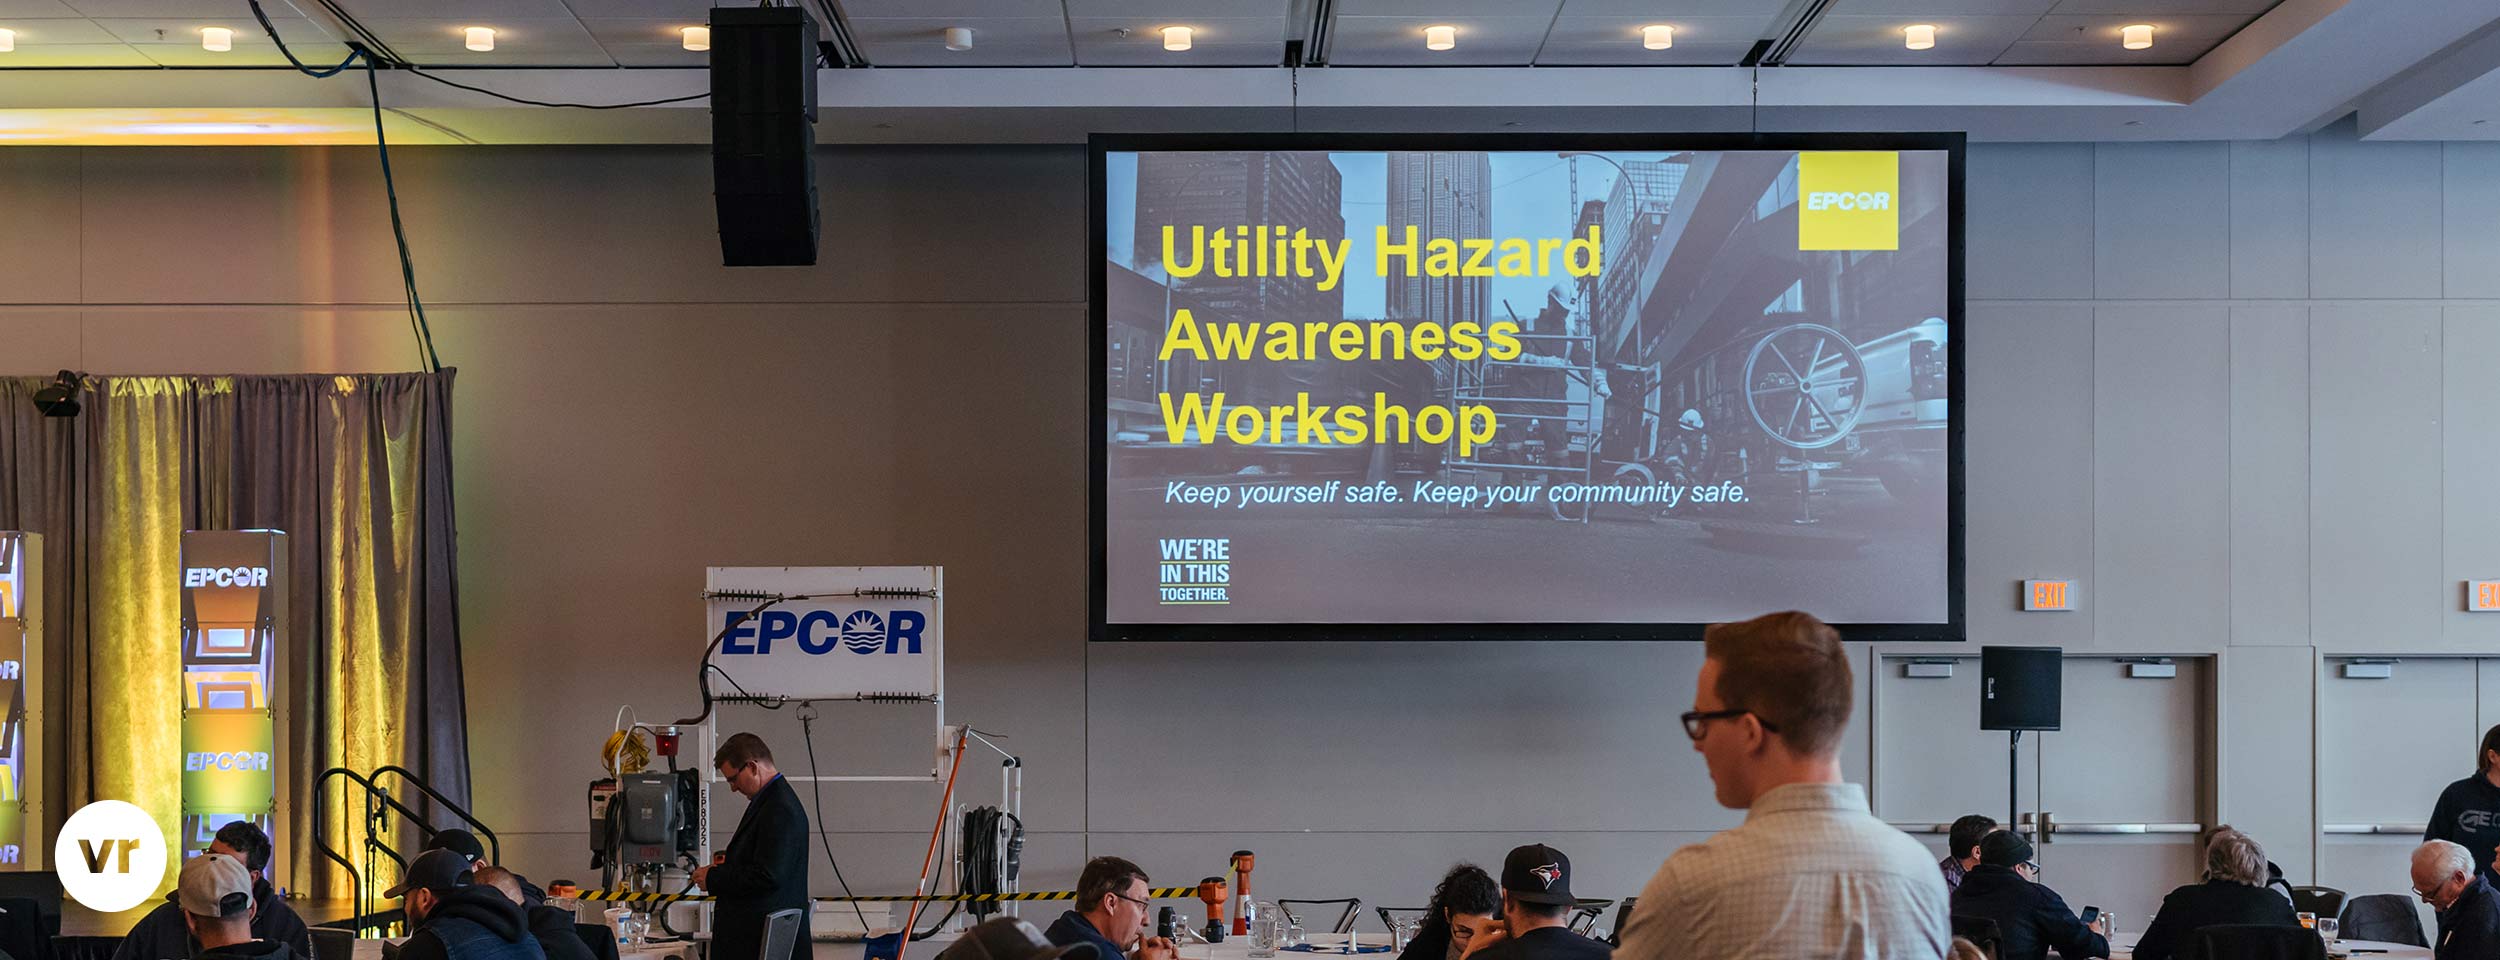 EPCOR Utility Hazard Awareness Workshop